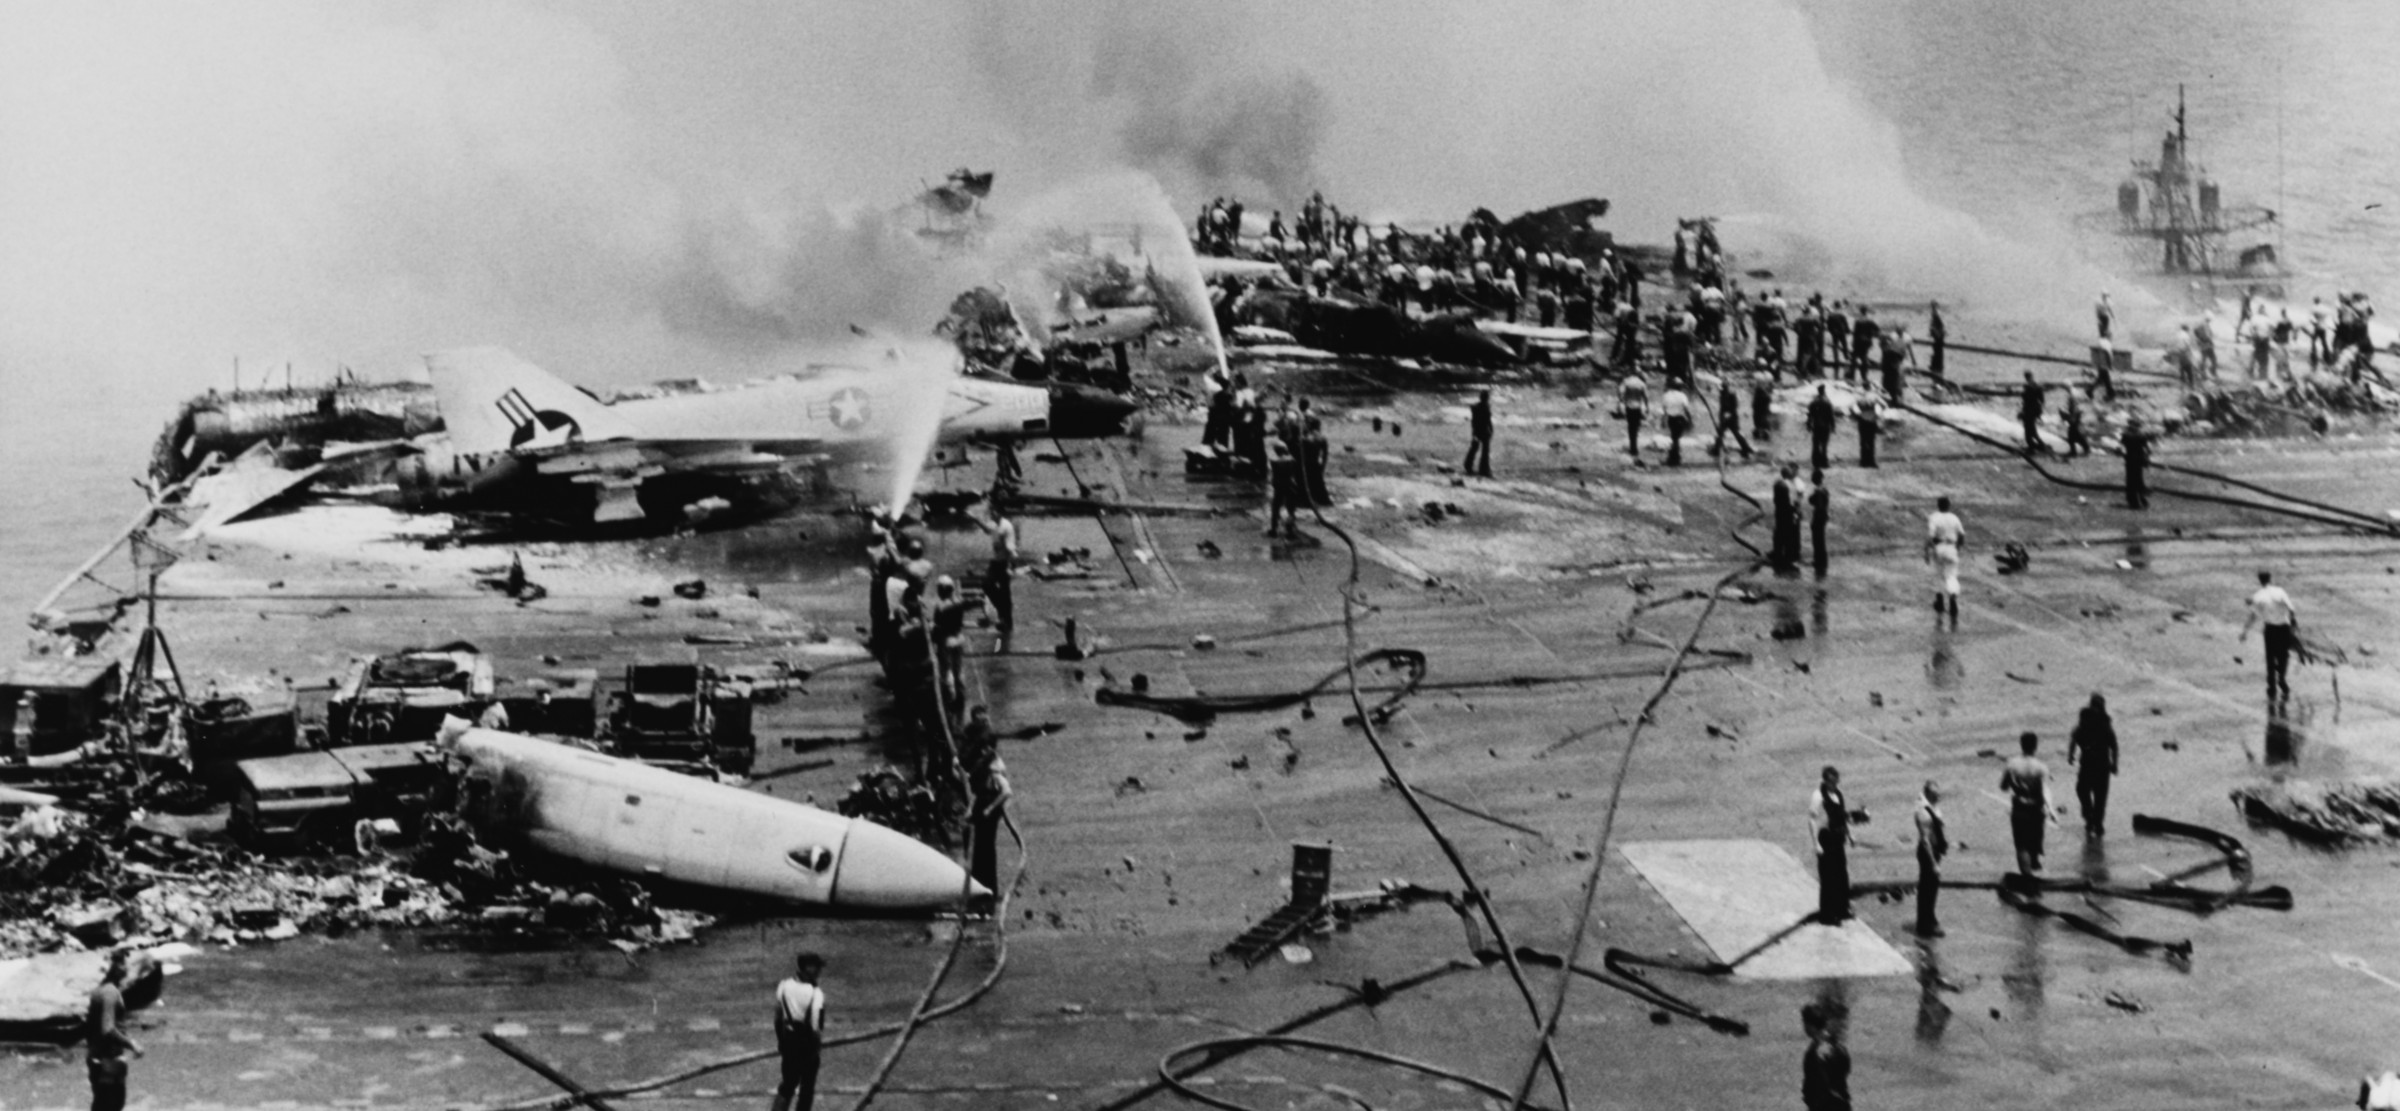 cv-59 uss forrestal aircraft carrier us navy fire accident damage 1967 50